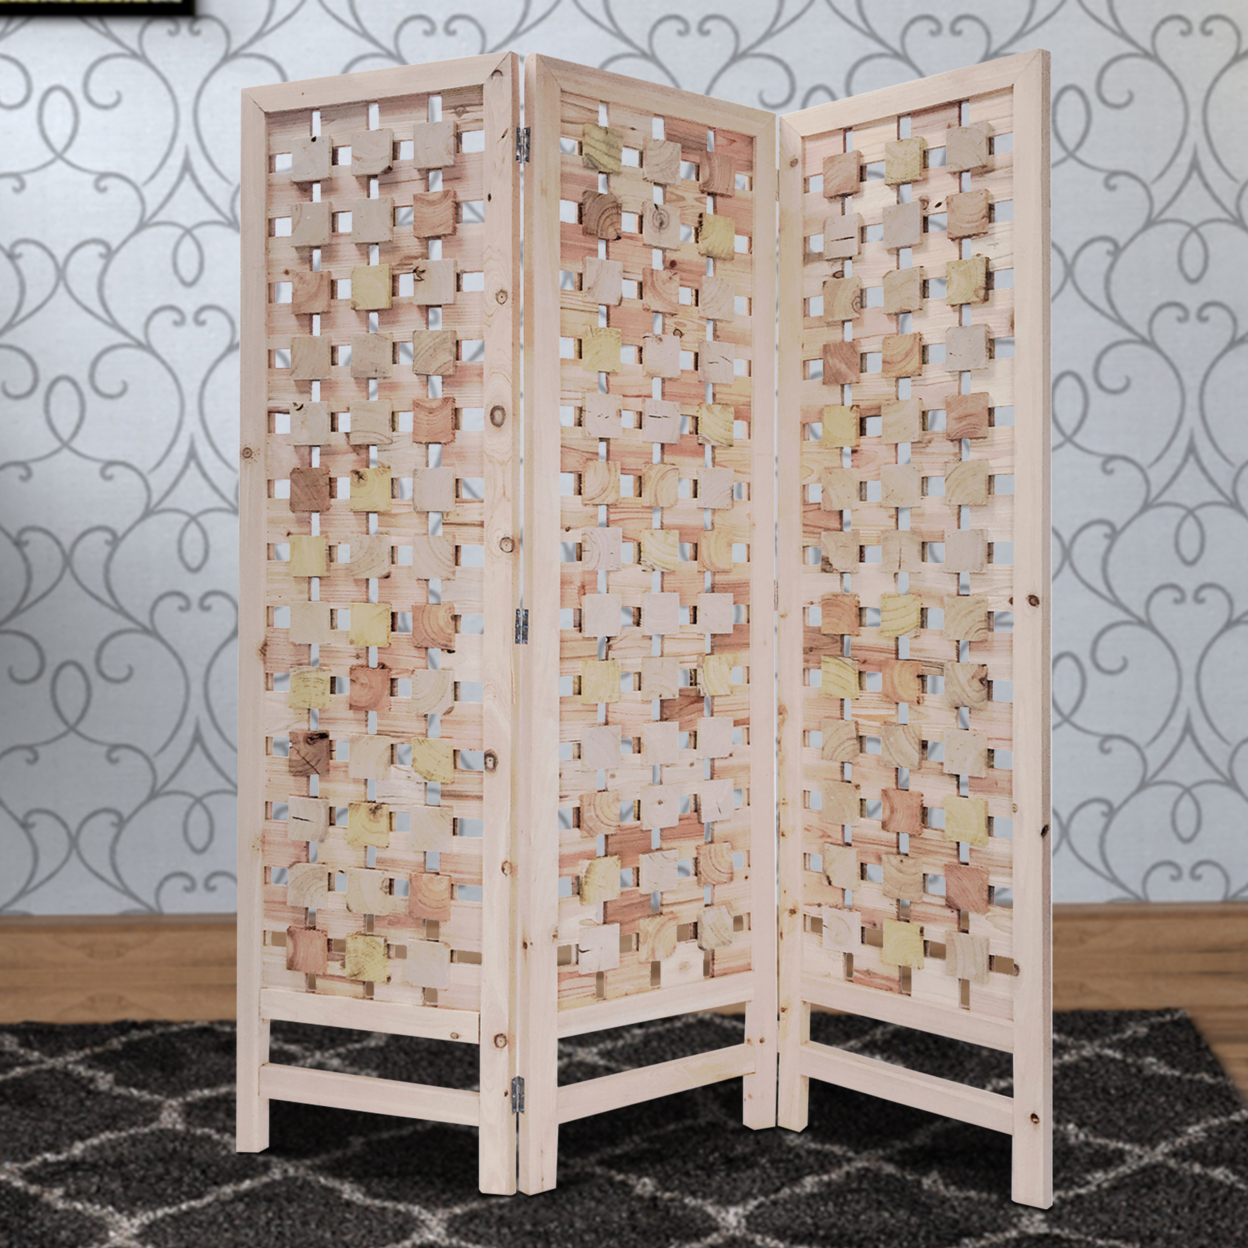 3 Panel Wooden Screen With Interspersed Square Pattern, Cream- Saltoro Sherpi